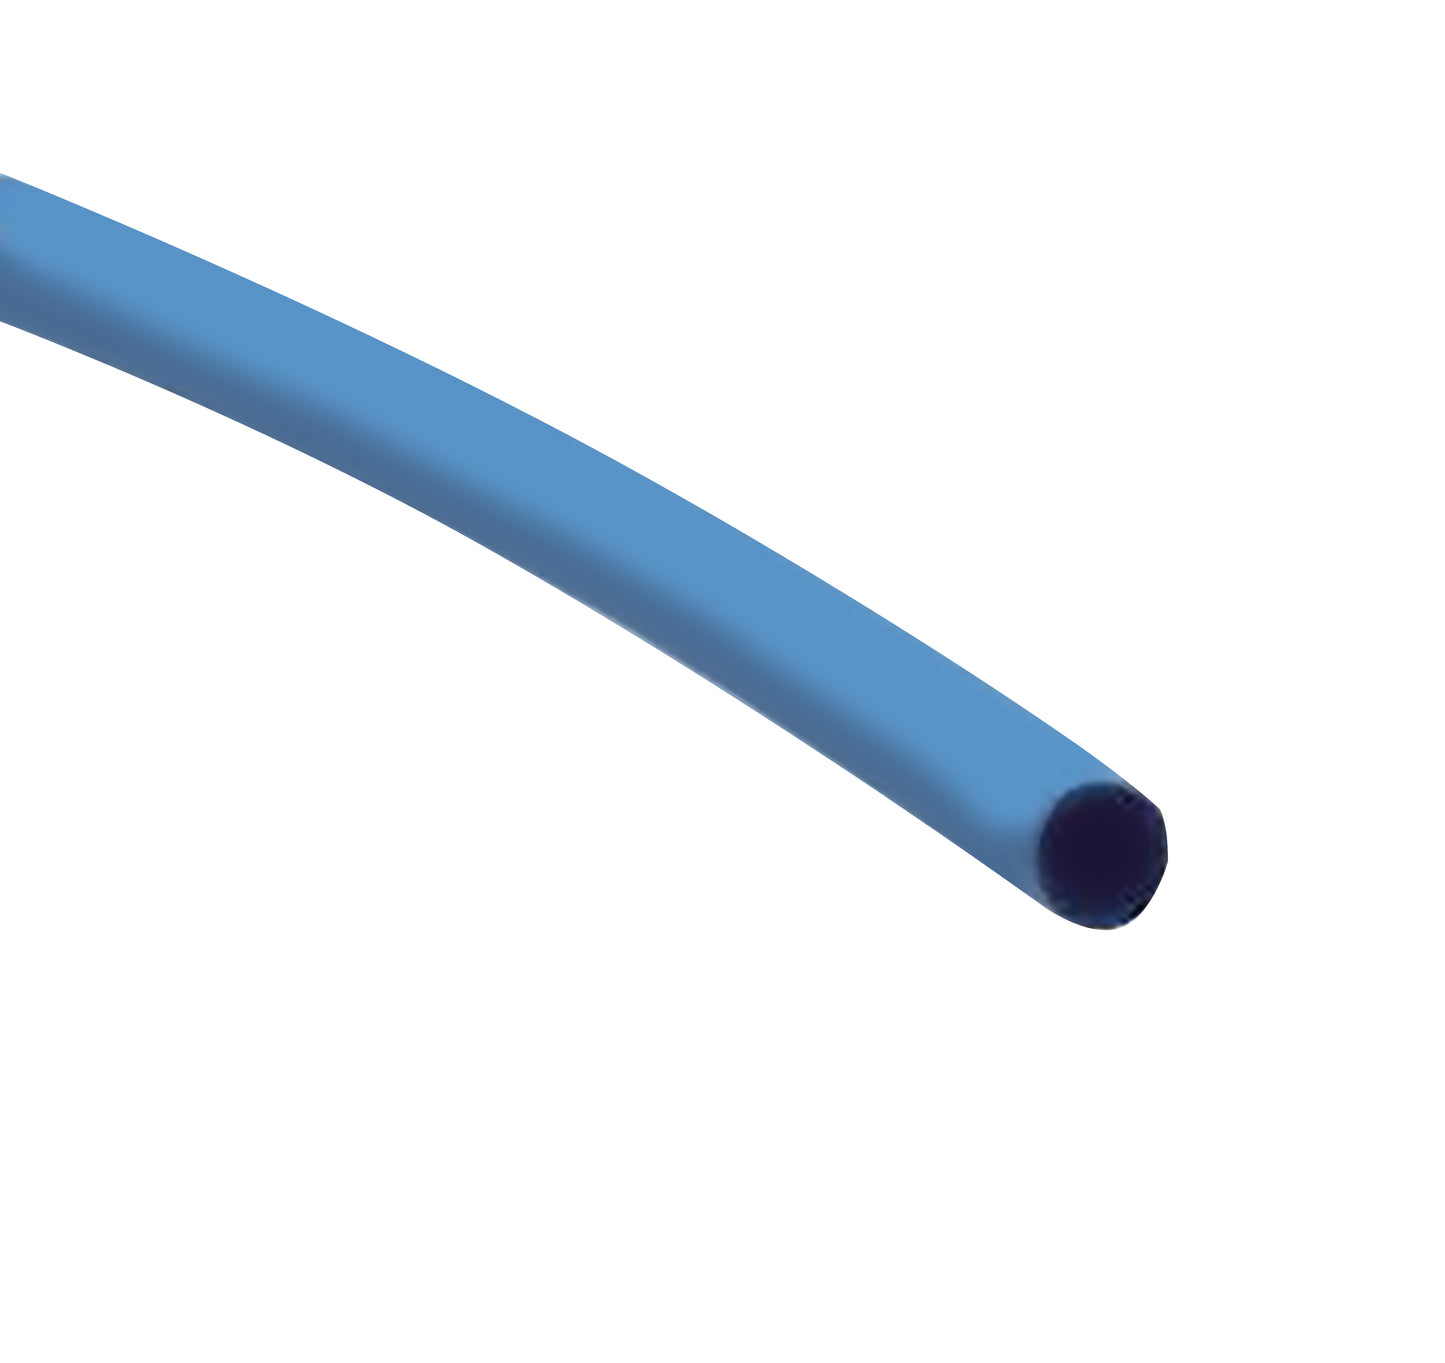 Flexible Thin Single Wall Non-Adhesive Heat Shrink Tubing 2:1 Blue 1/4" ID - 25' Ft Spool